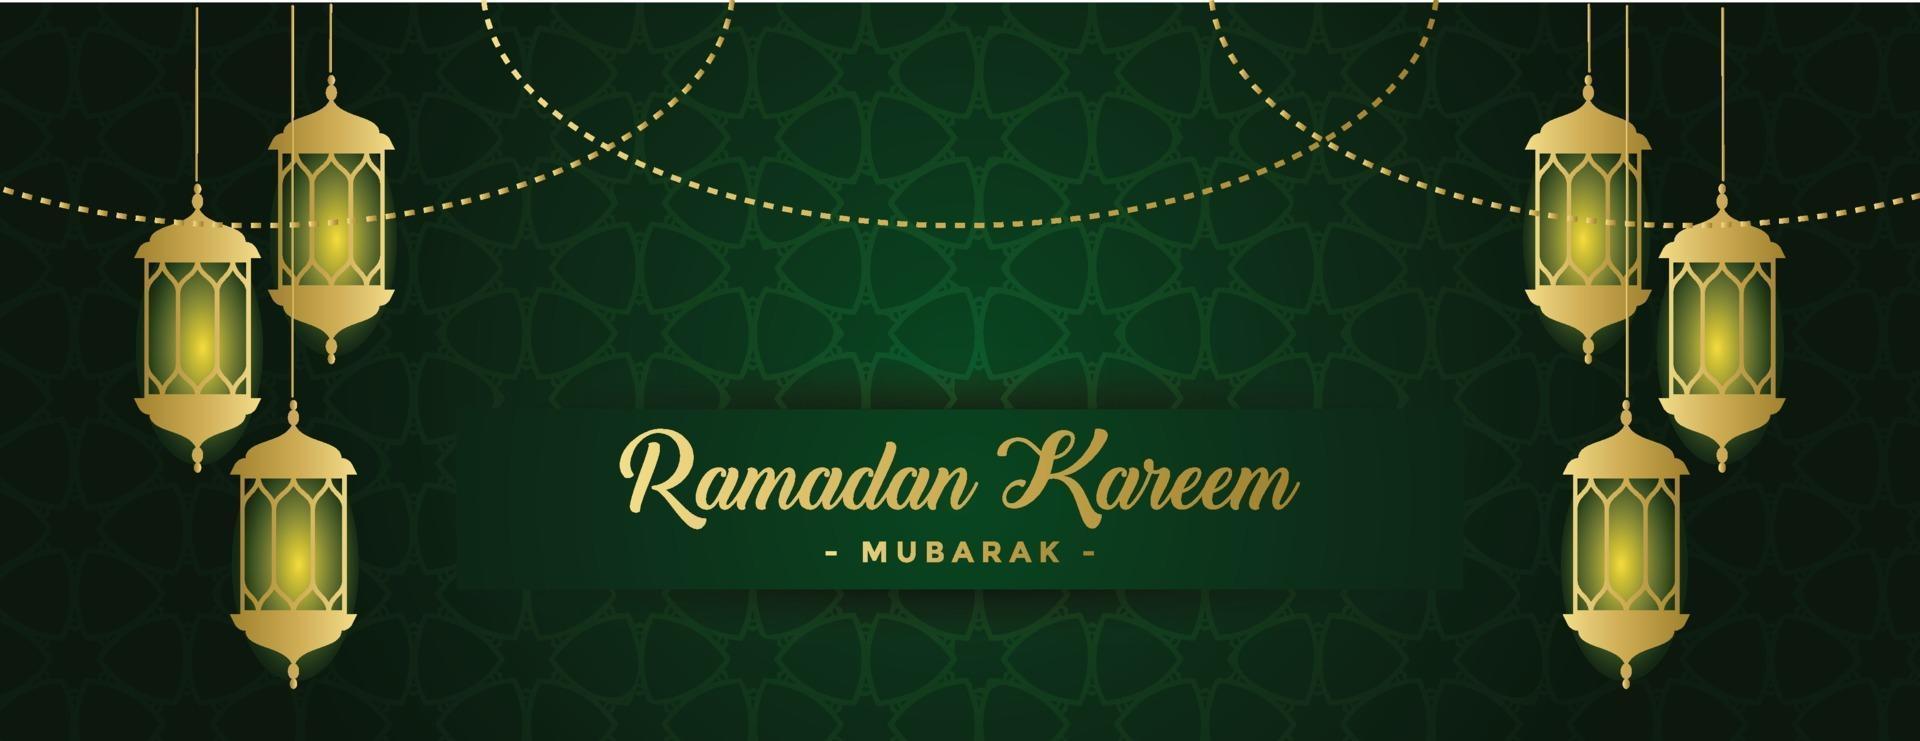 plantilla de fondo de banner de ramadan kareem vector